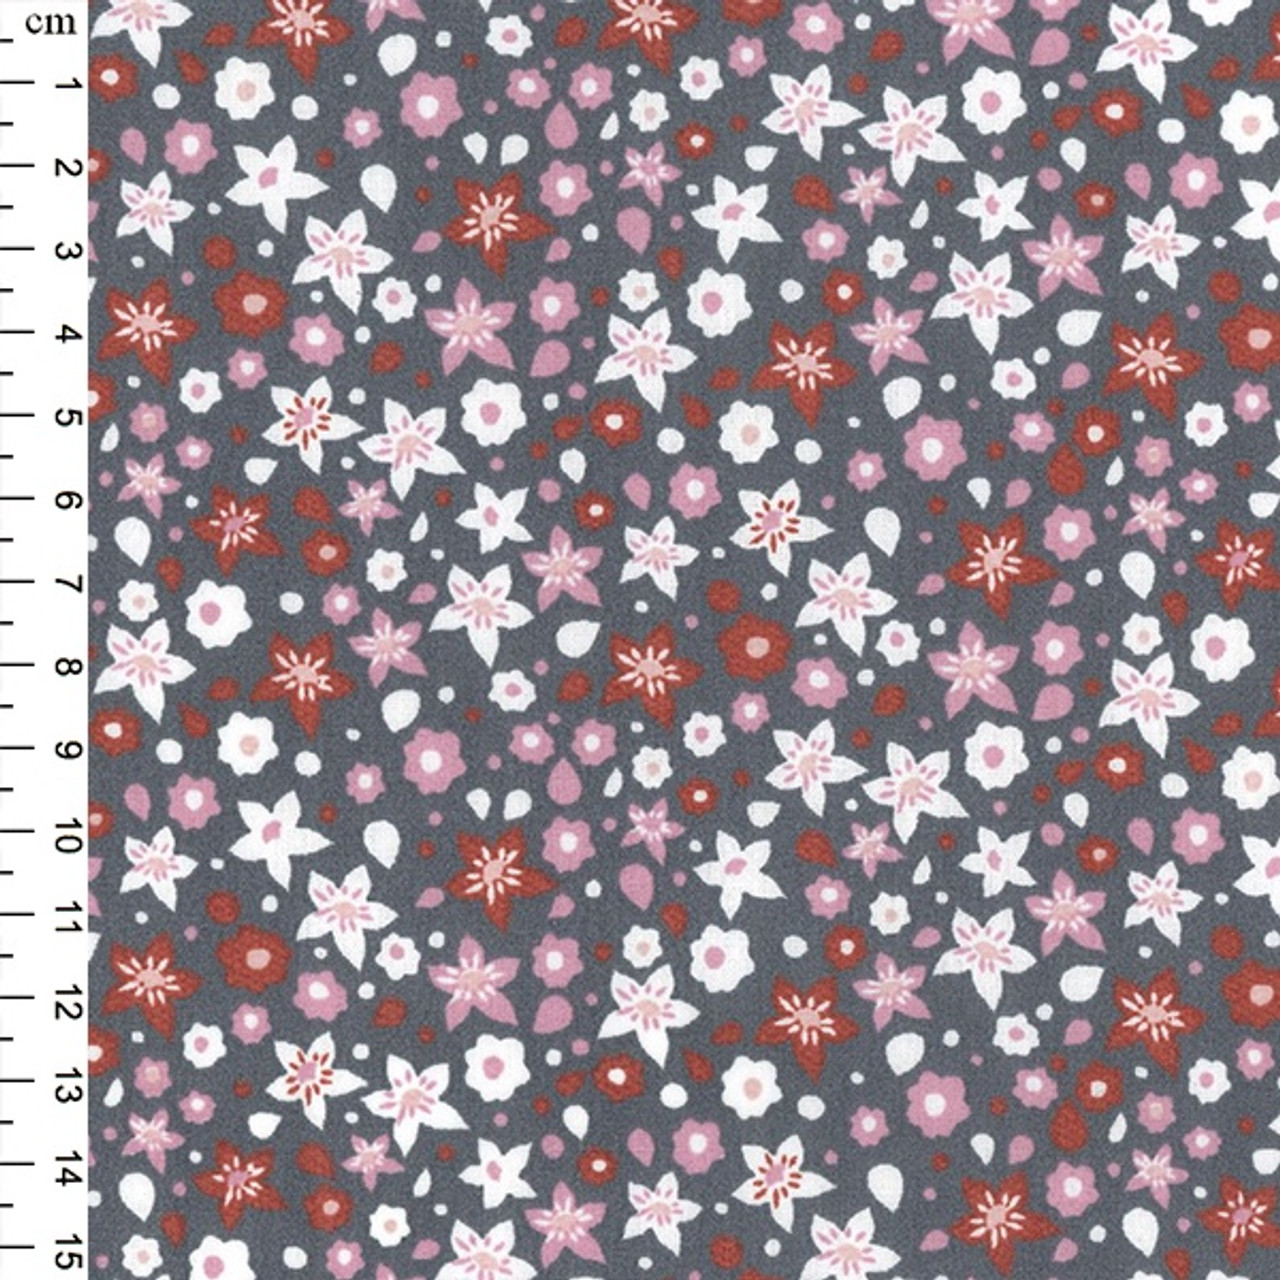 Fuchsia Floral on Grey 100% Cotton Poplin Fabric, 145cm/57in wide, Sold Per HALF Metre